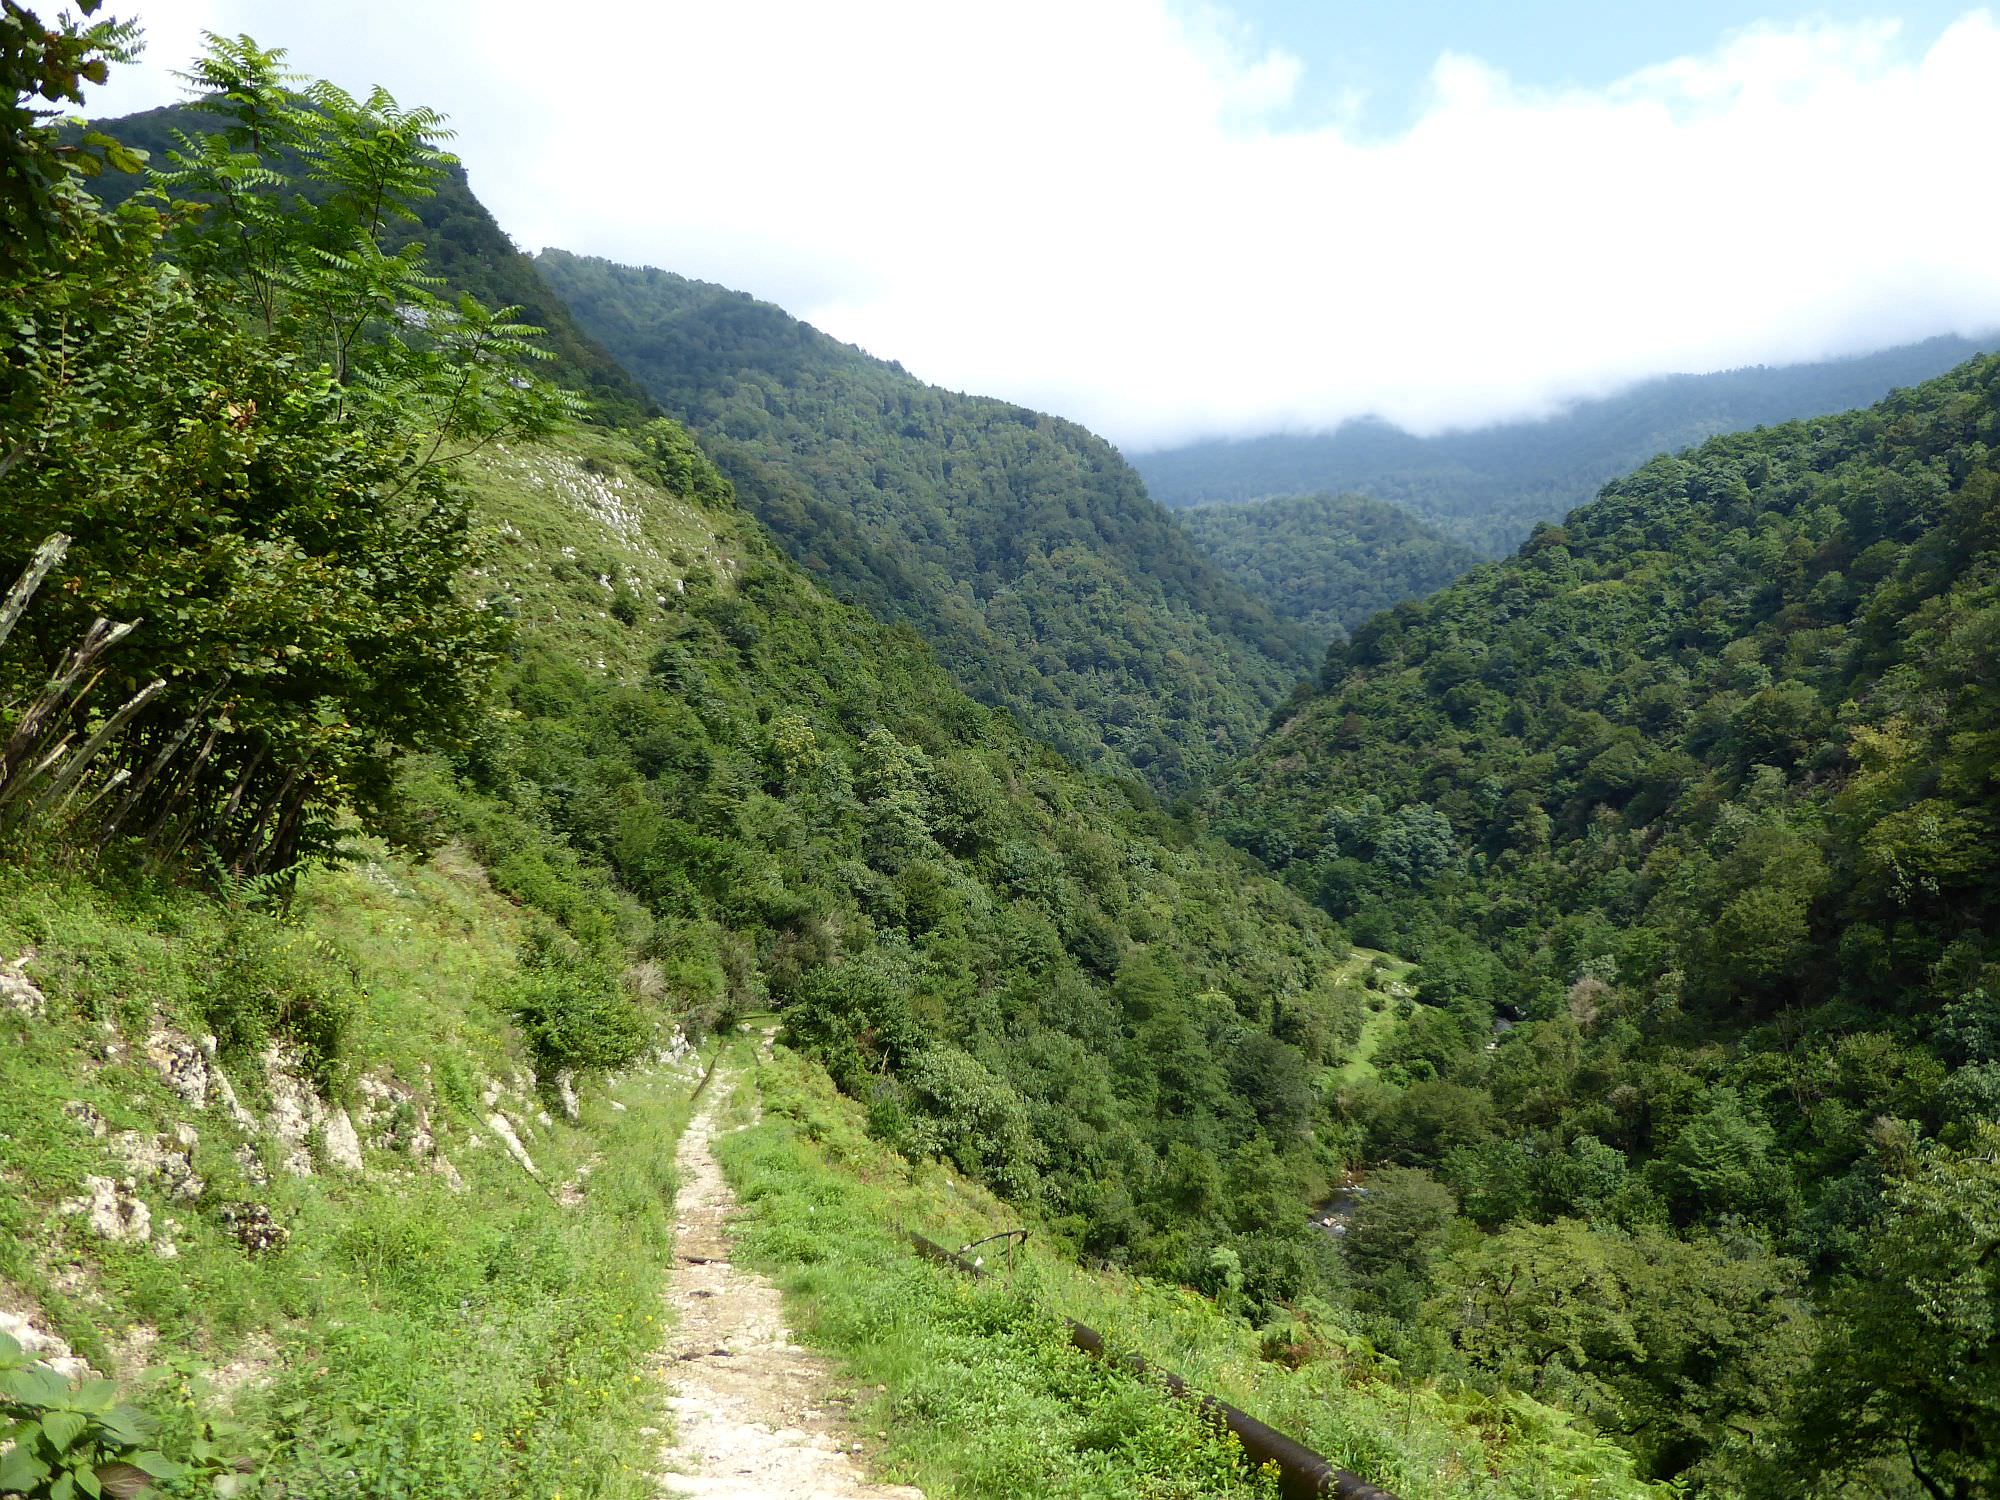 Entering the Intsra valley